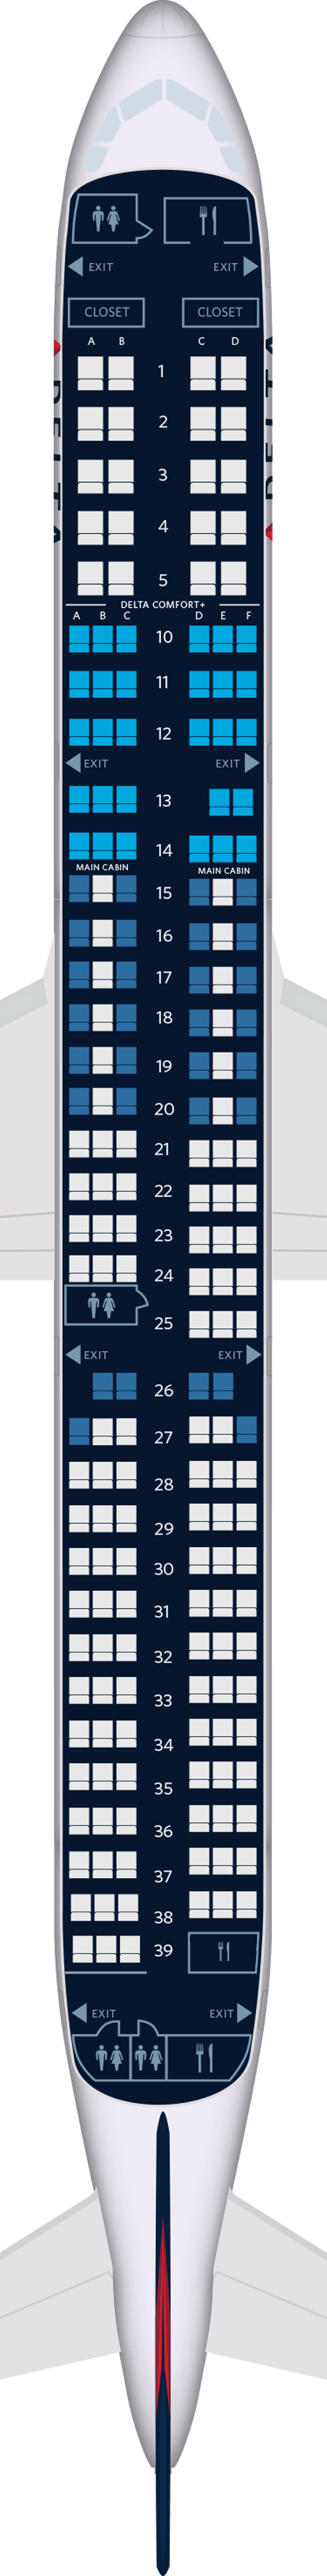 Sas Airbus A321neo Seat Map - Image to u